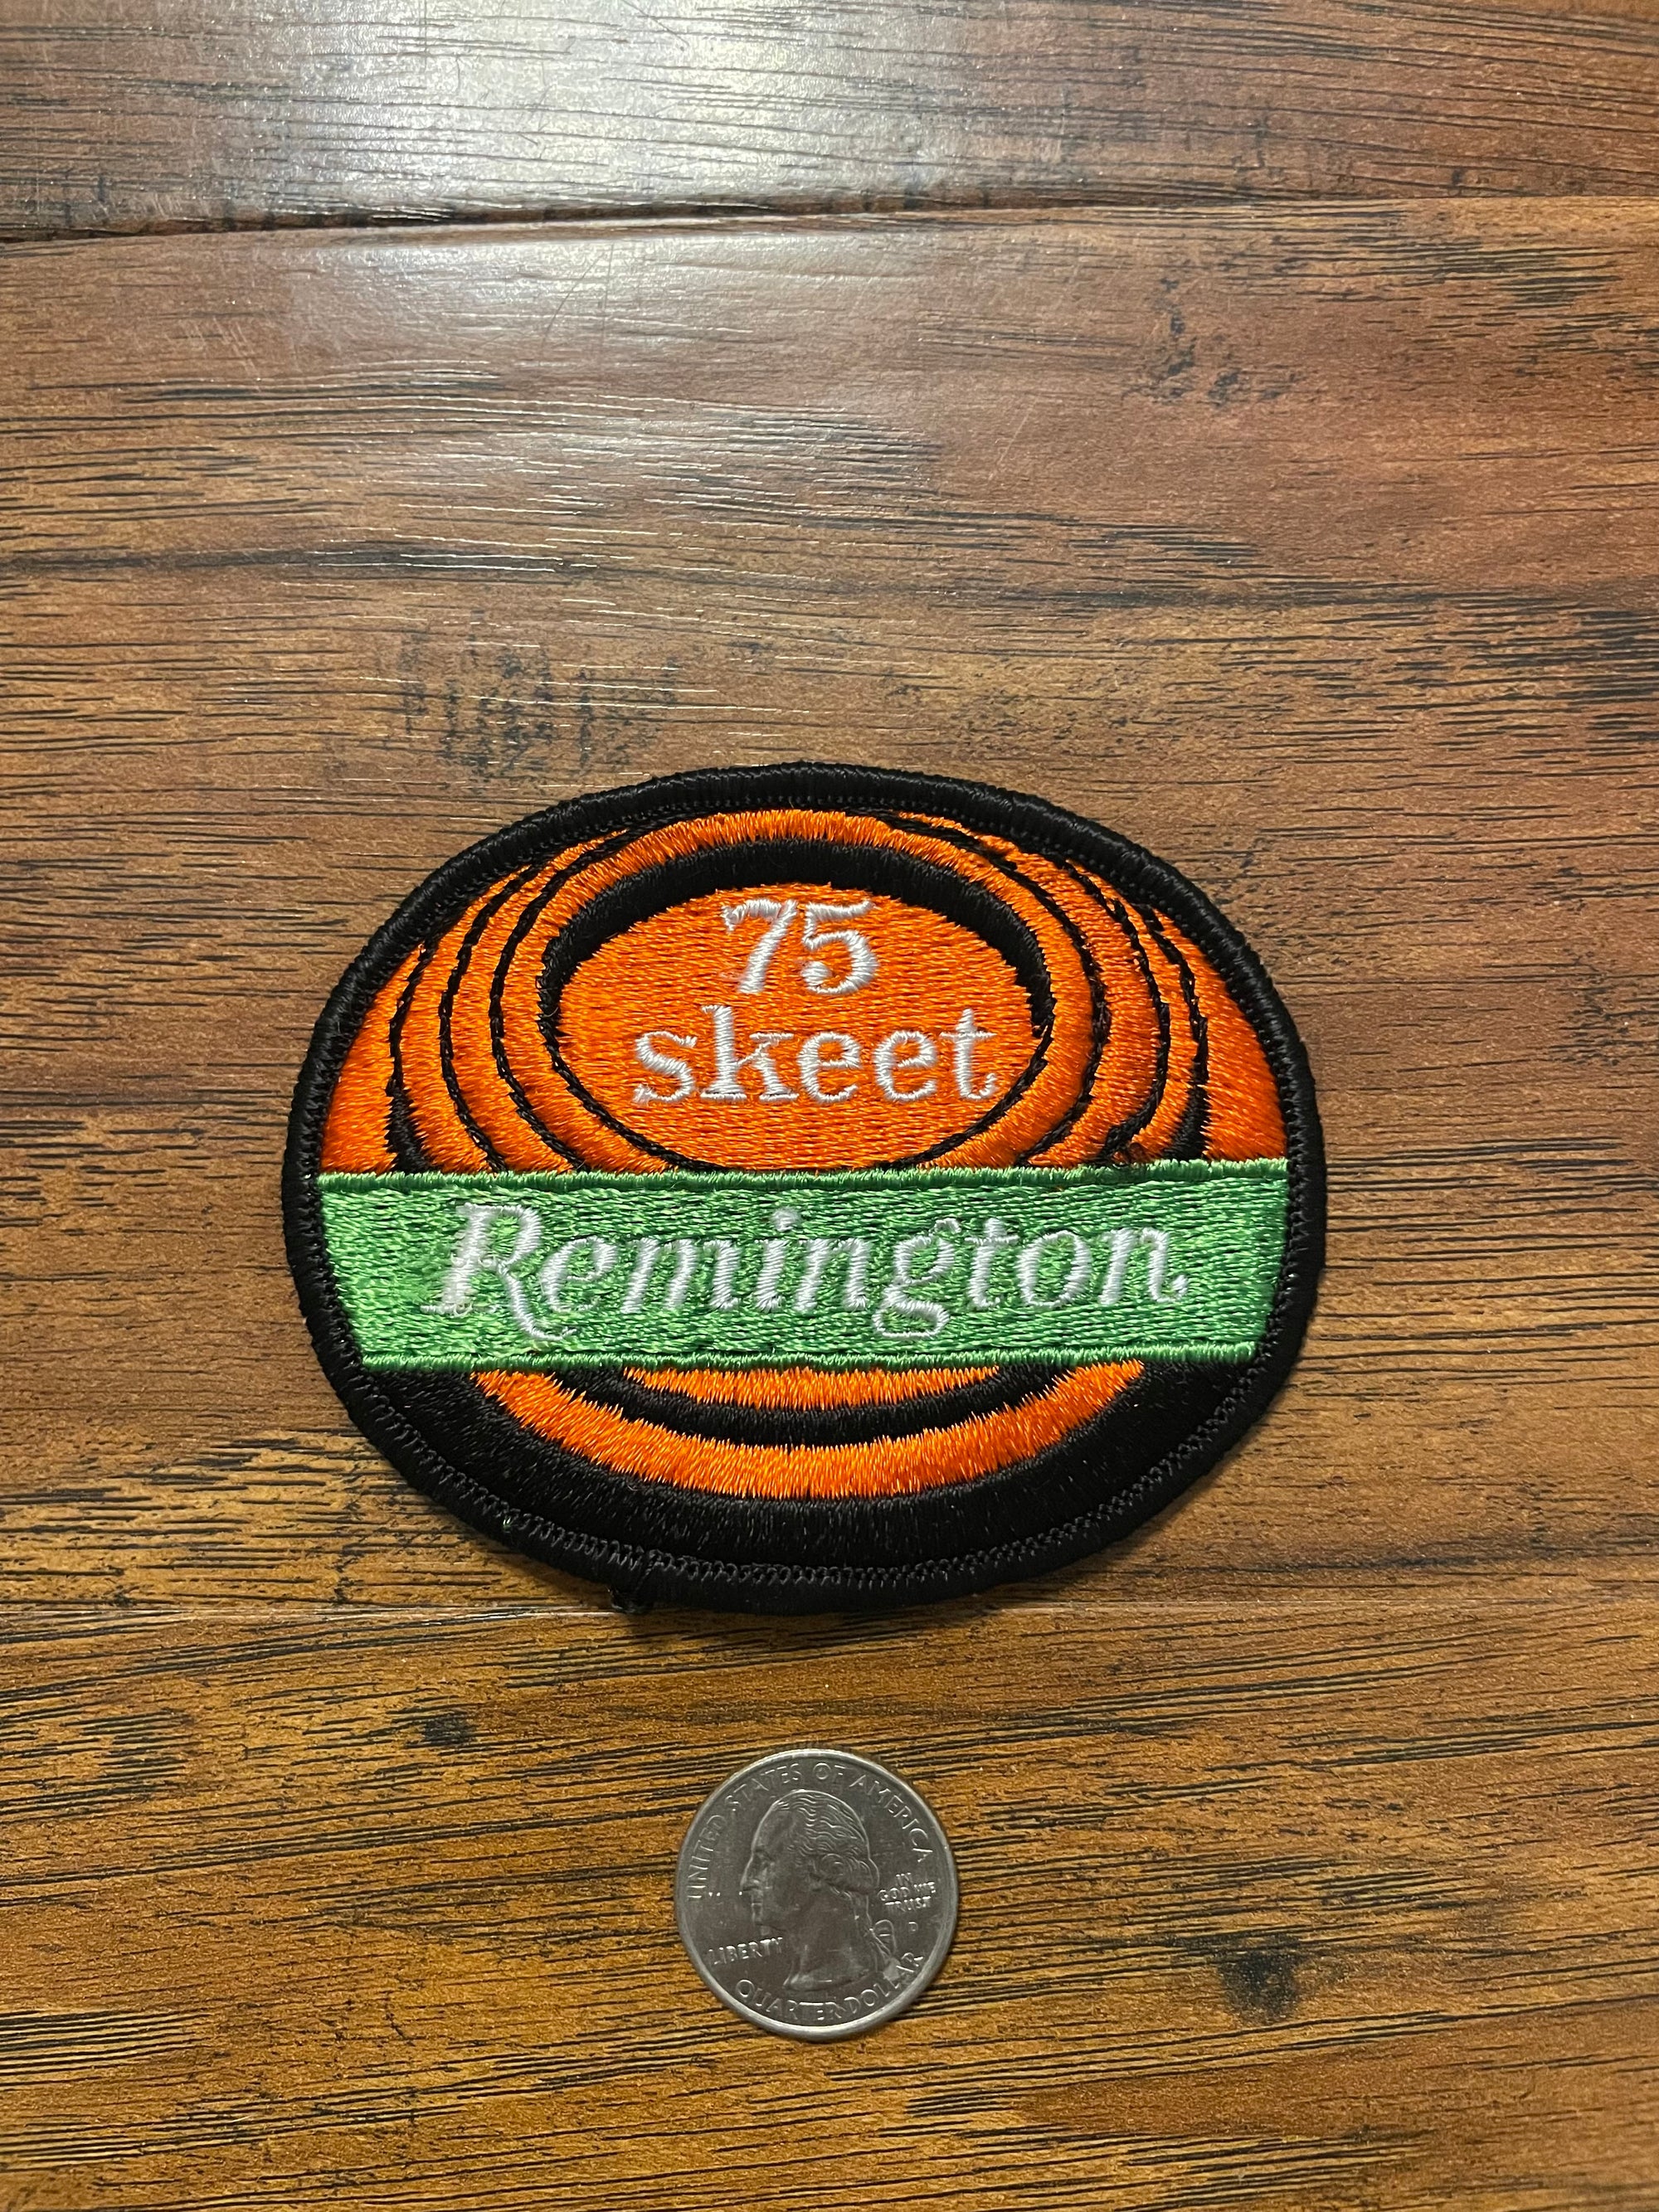 Vintage 75 Skeet Remington